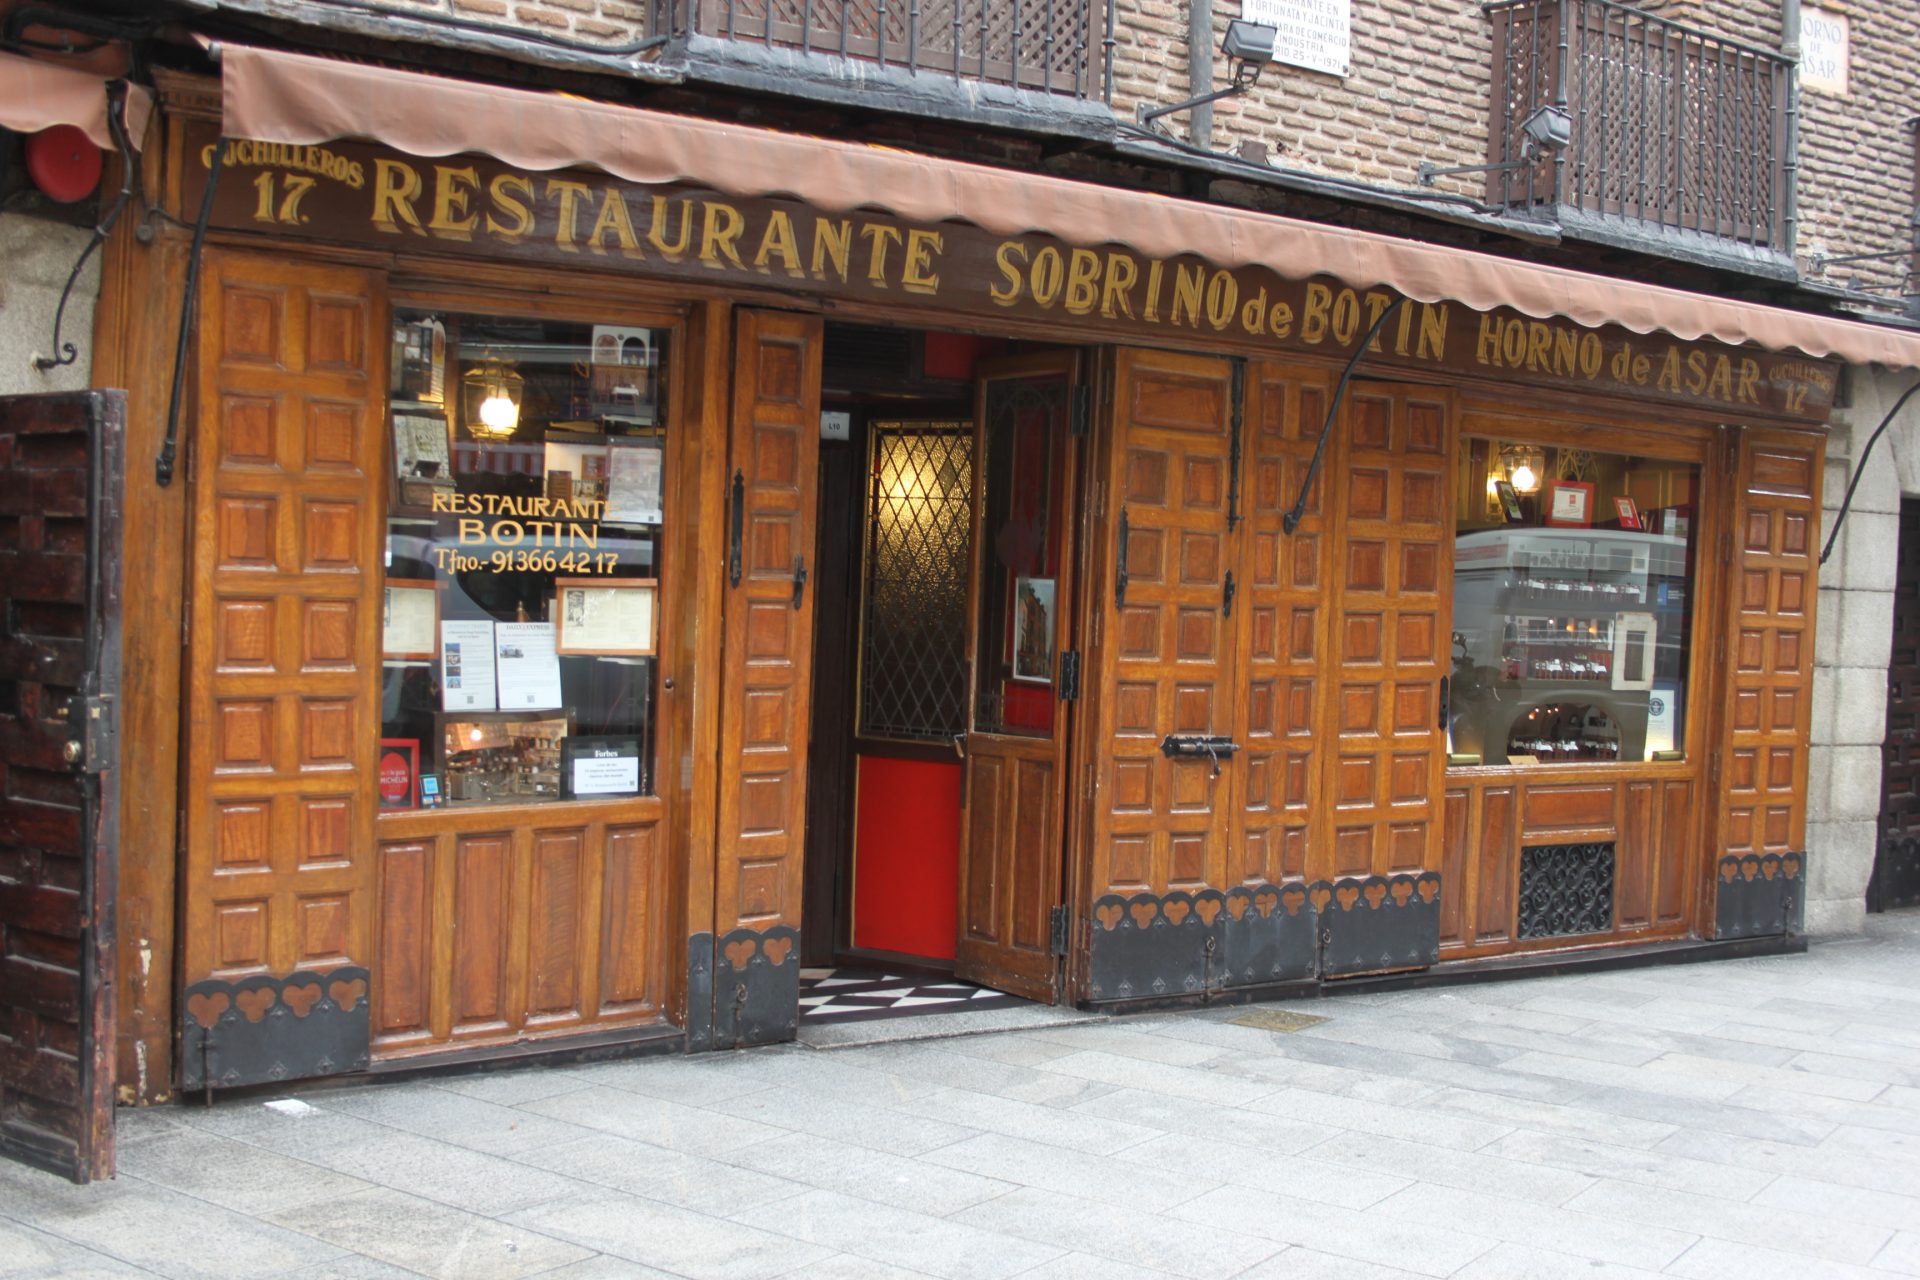 The world's oldest restaurant